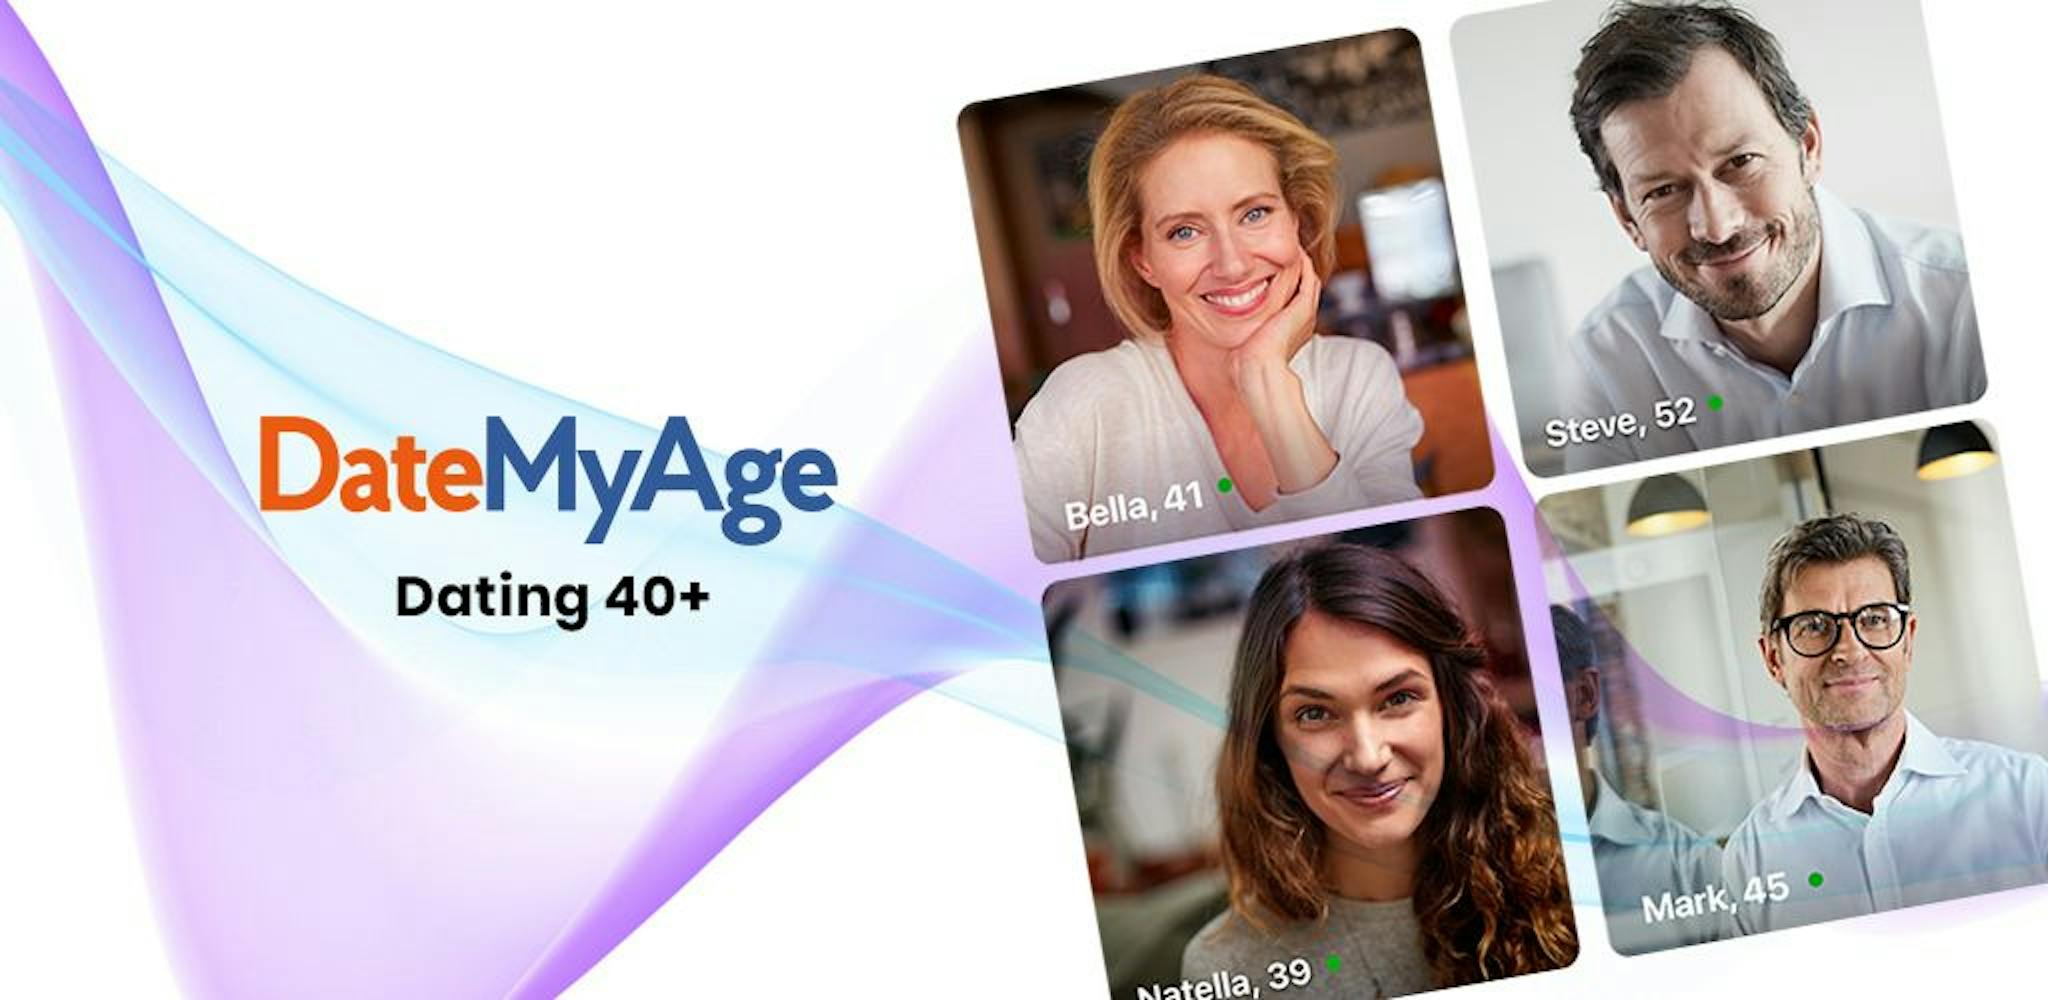 DateMyAge — Social Discovery Group 为 40 岁以上人士推出的小众约会应用程序